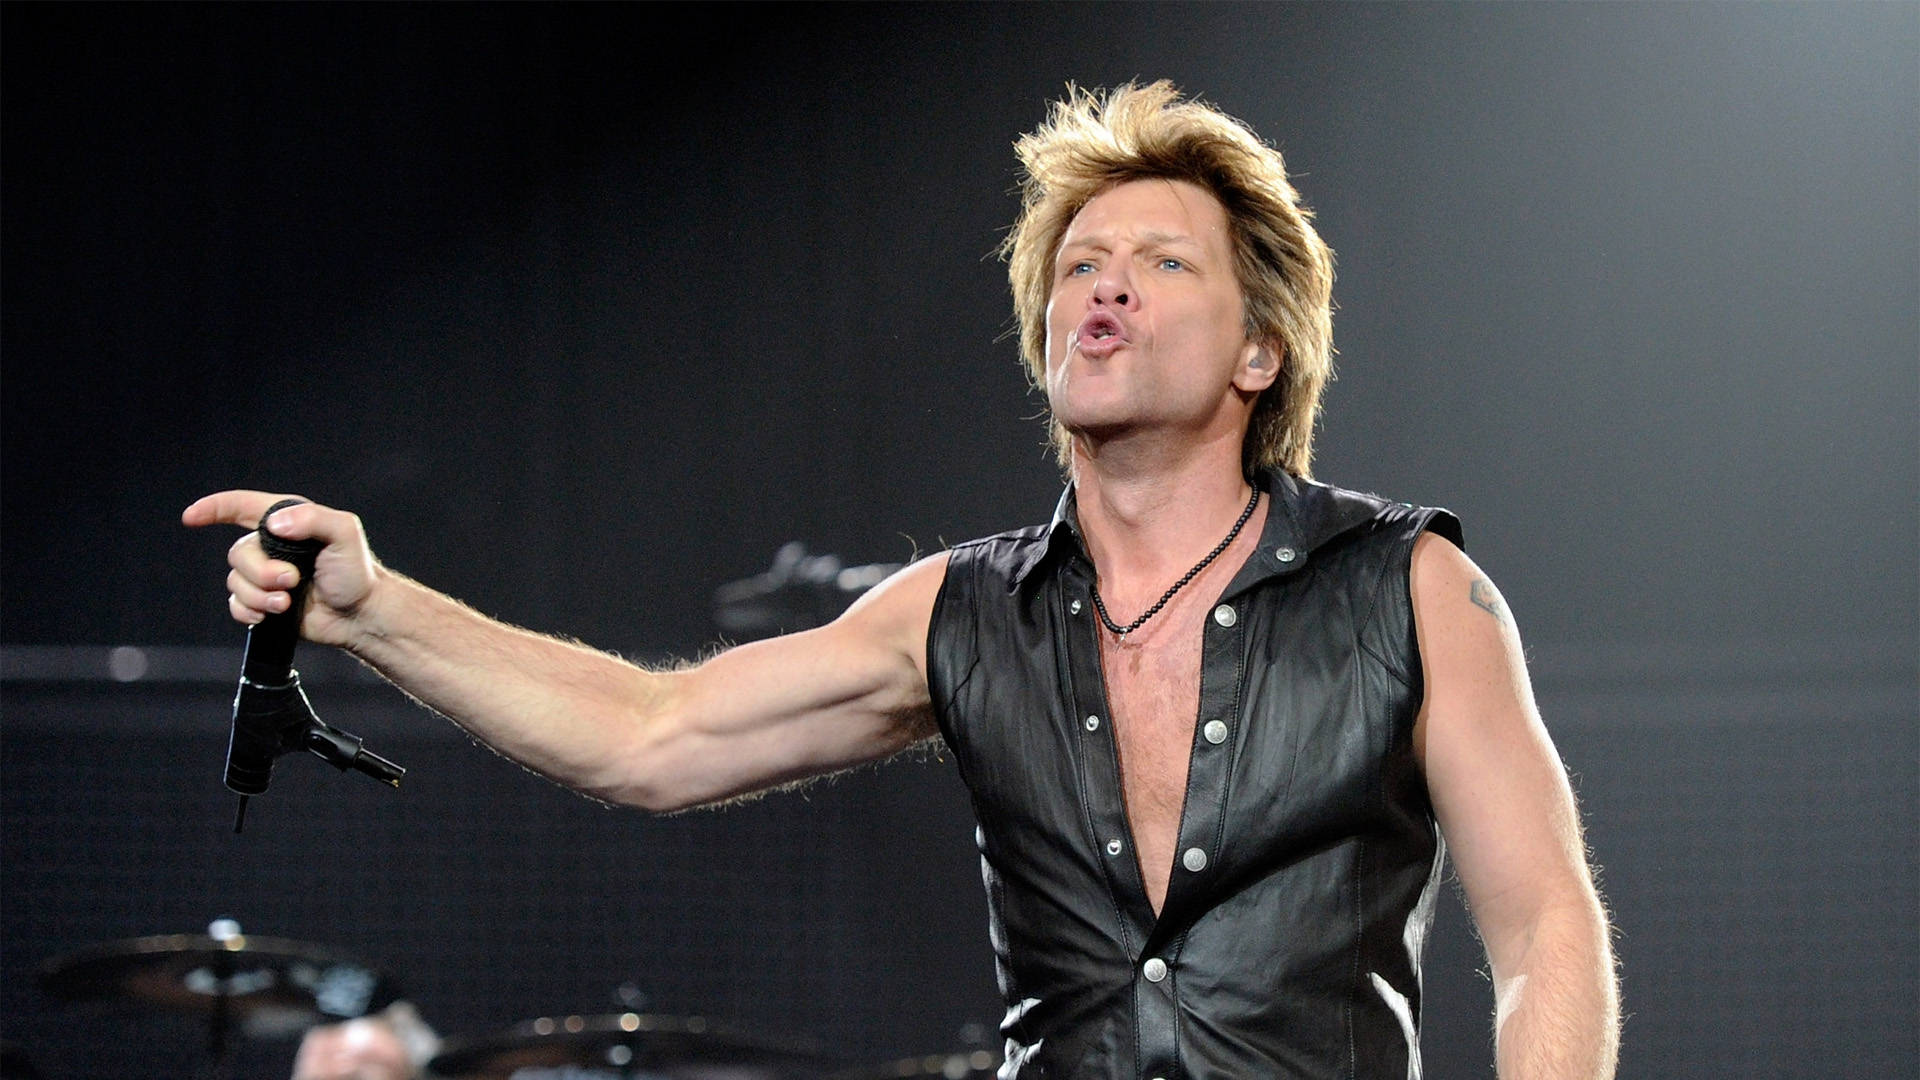 John Bon Jovi 2010 optræder på 02 Arena London mønster tapet. Wallpaper